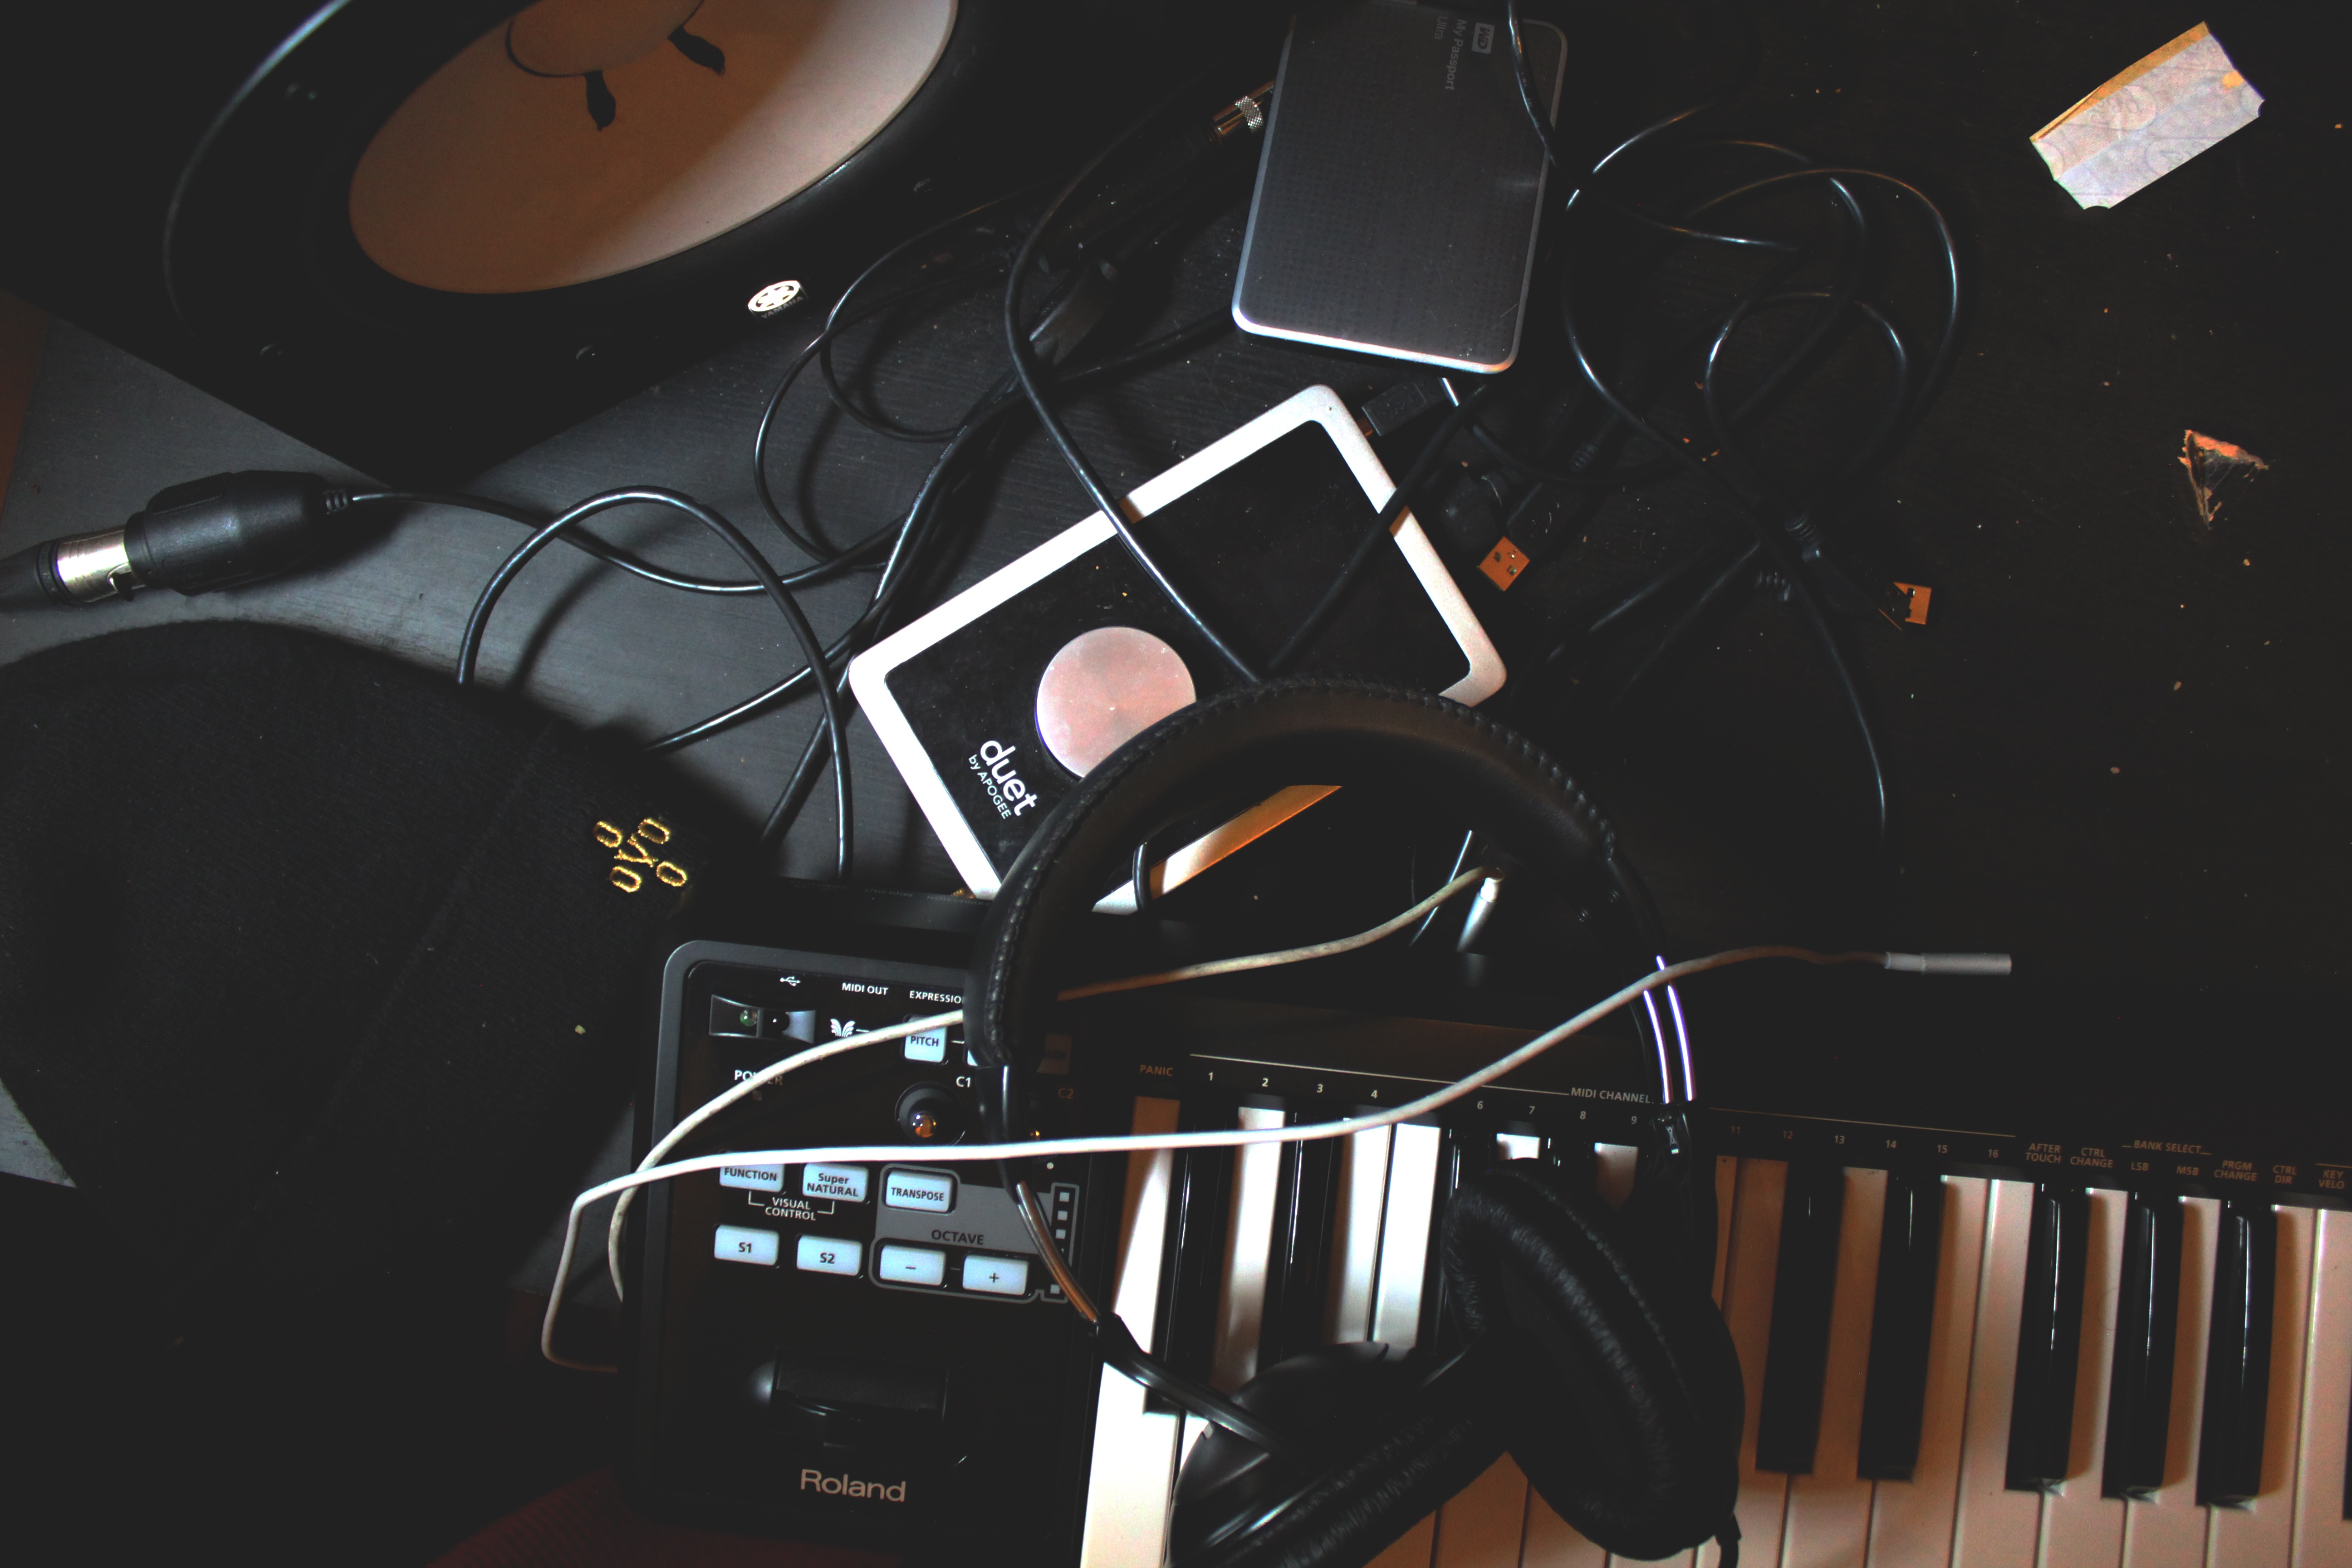 Recording Studio instruments and equipment